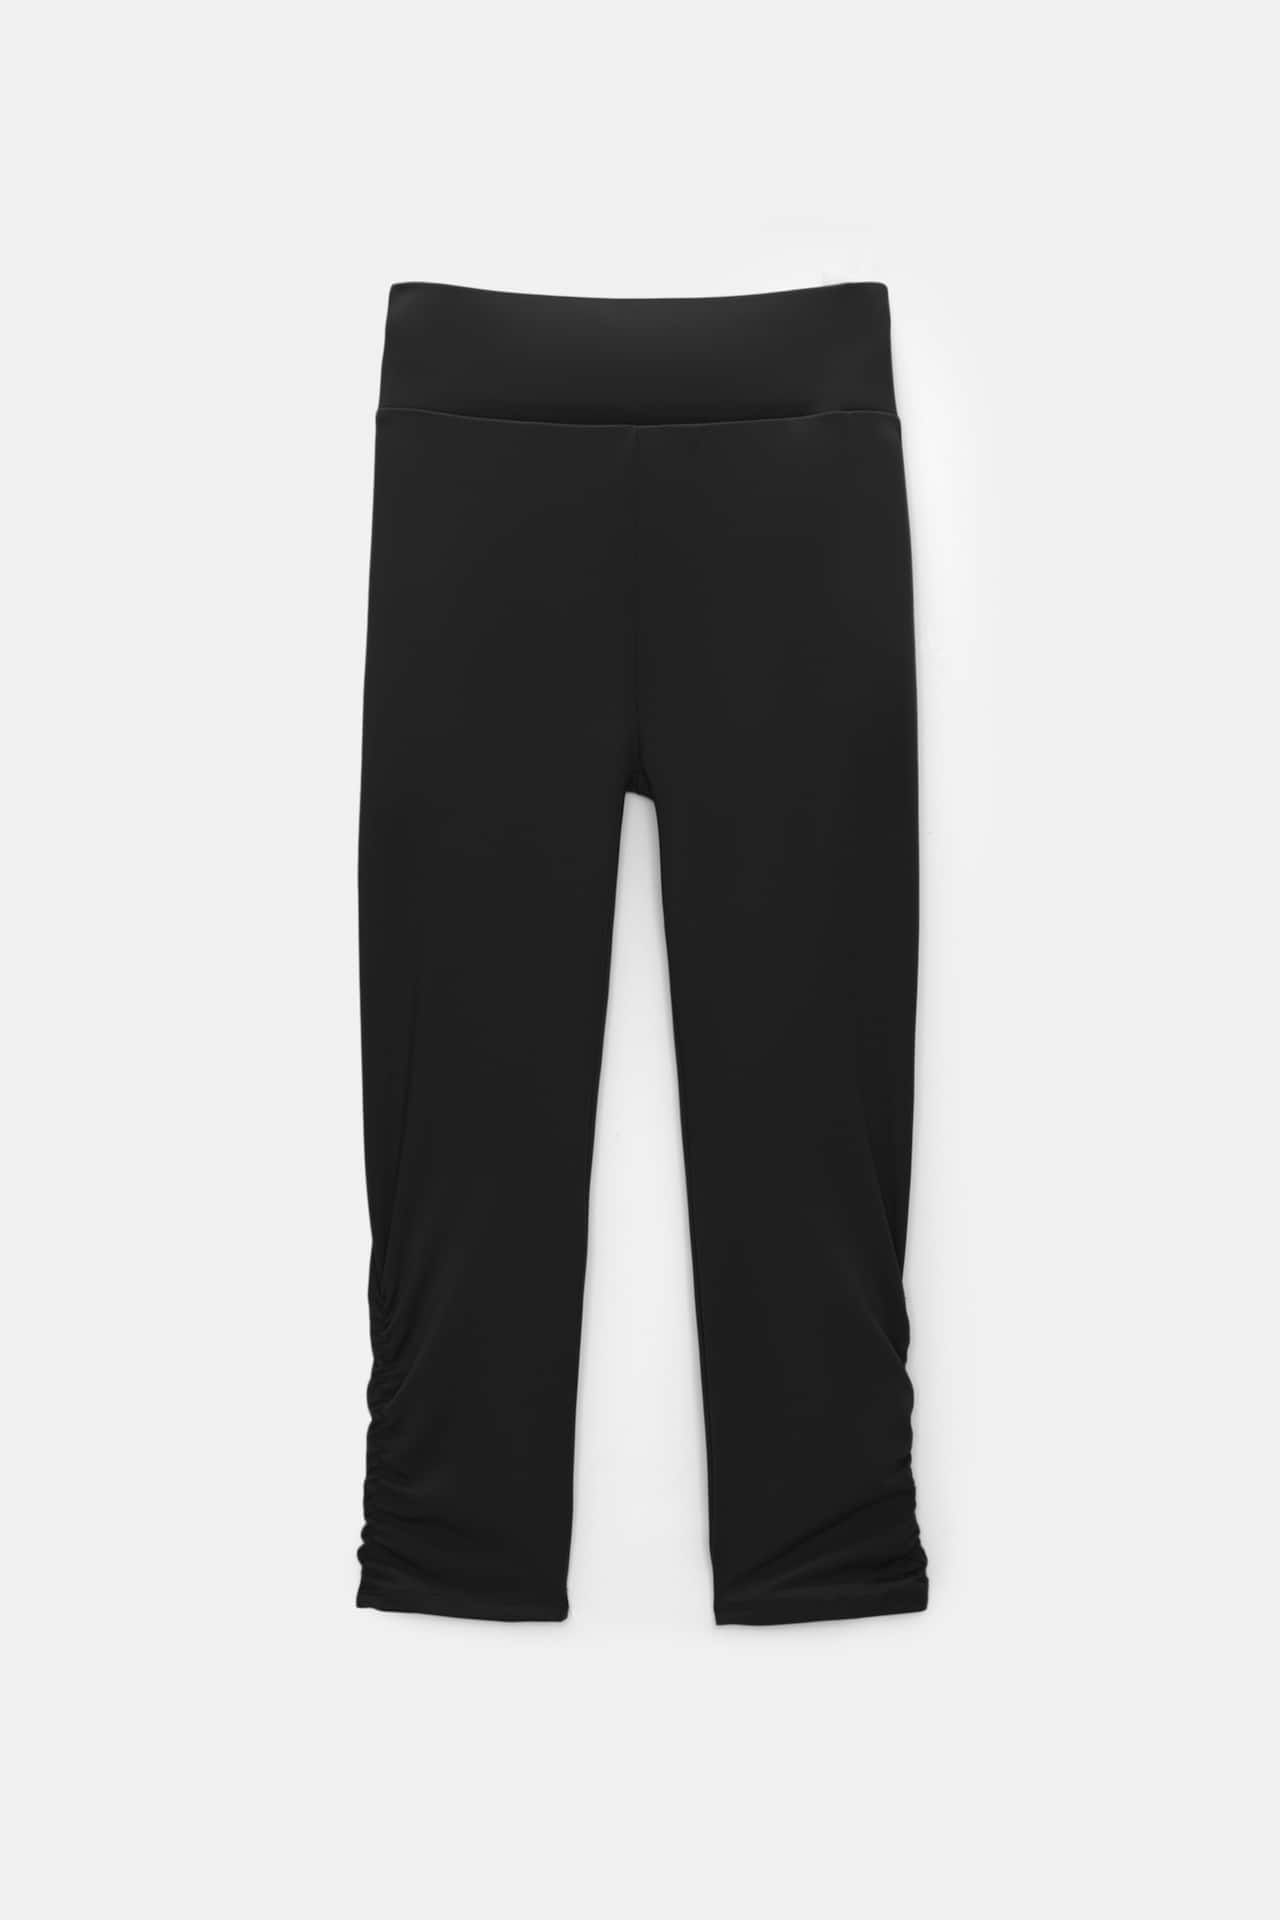 Capri leggings with gathered detail | PULL and BEAR UK